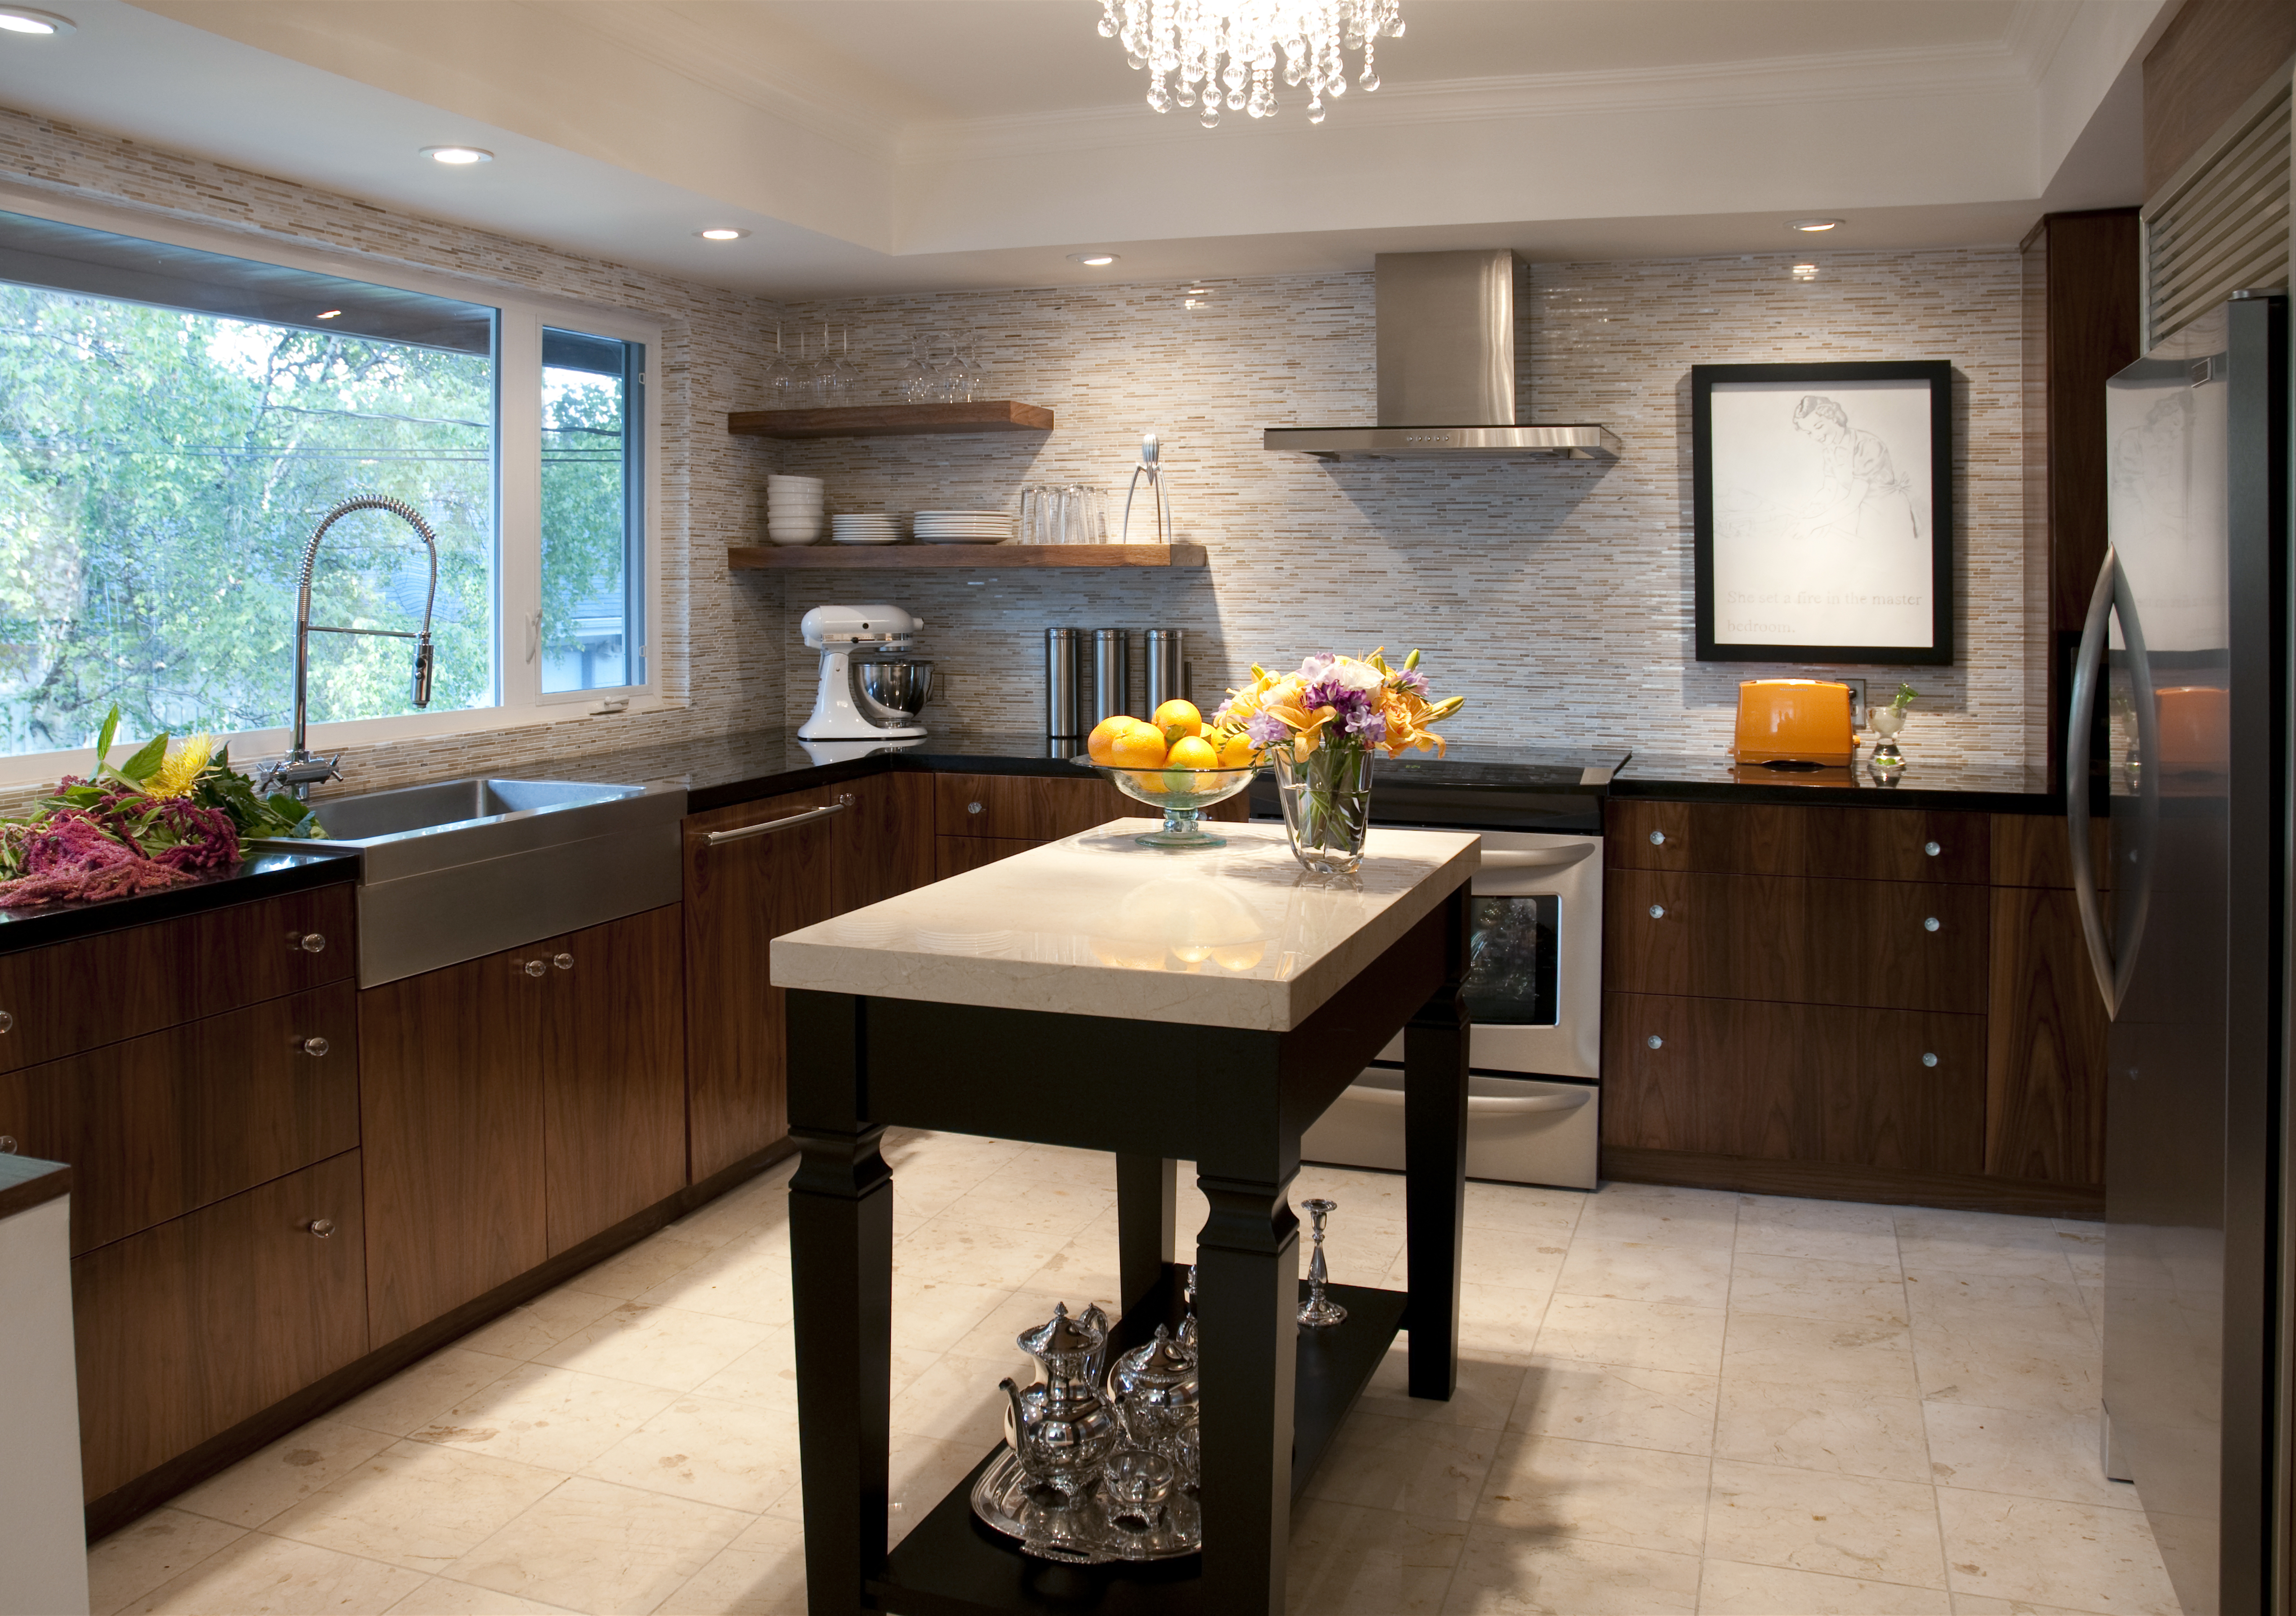 Image: Kitchen, table, service, oranges, vase, set, window, refrigerator, picture